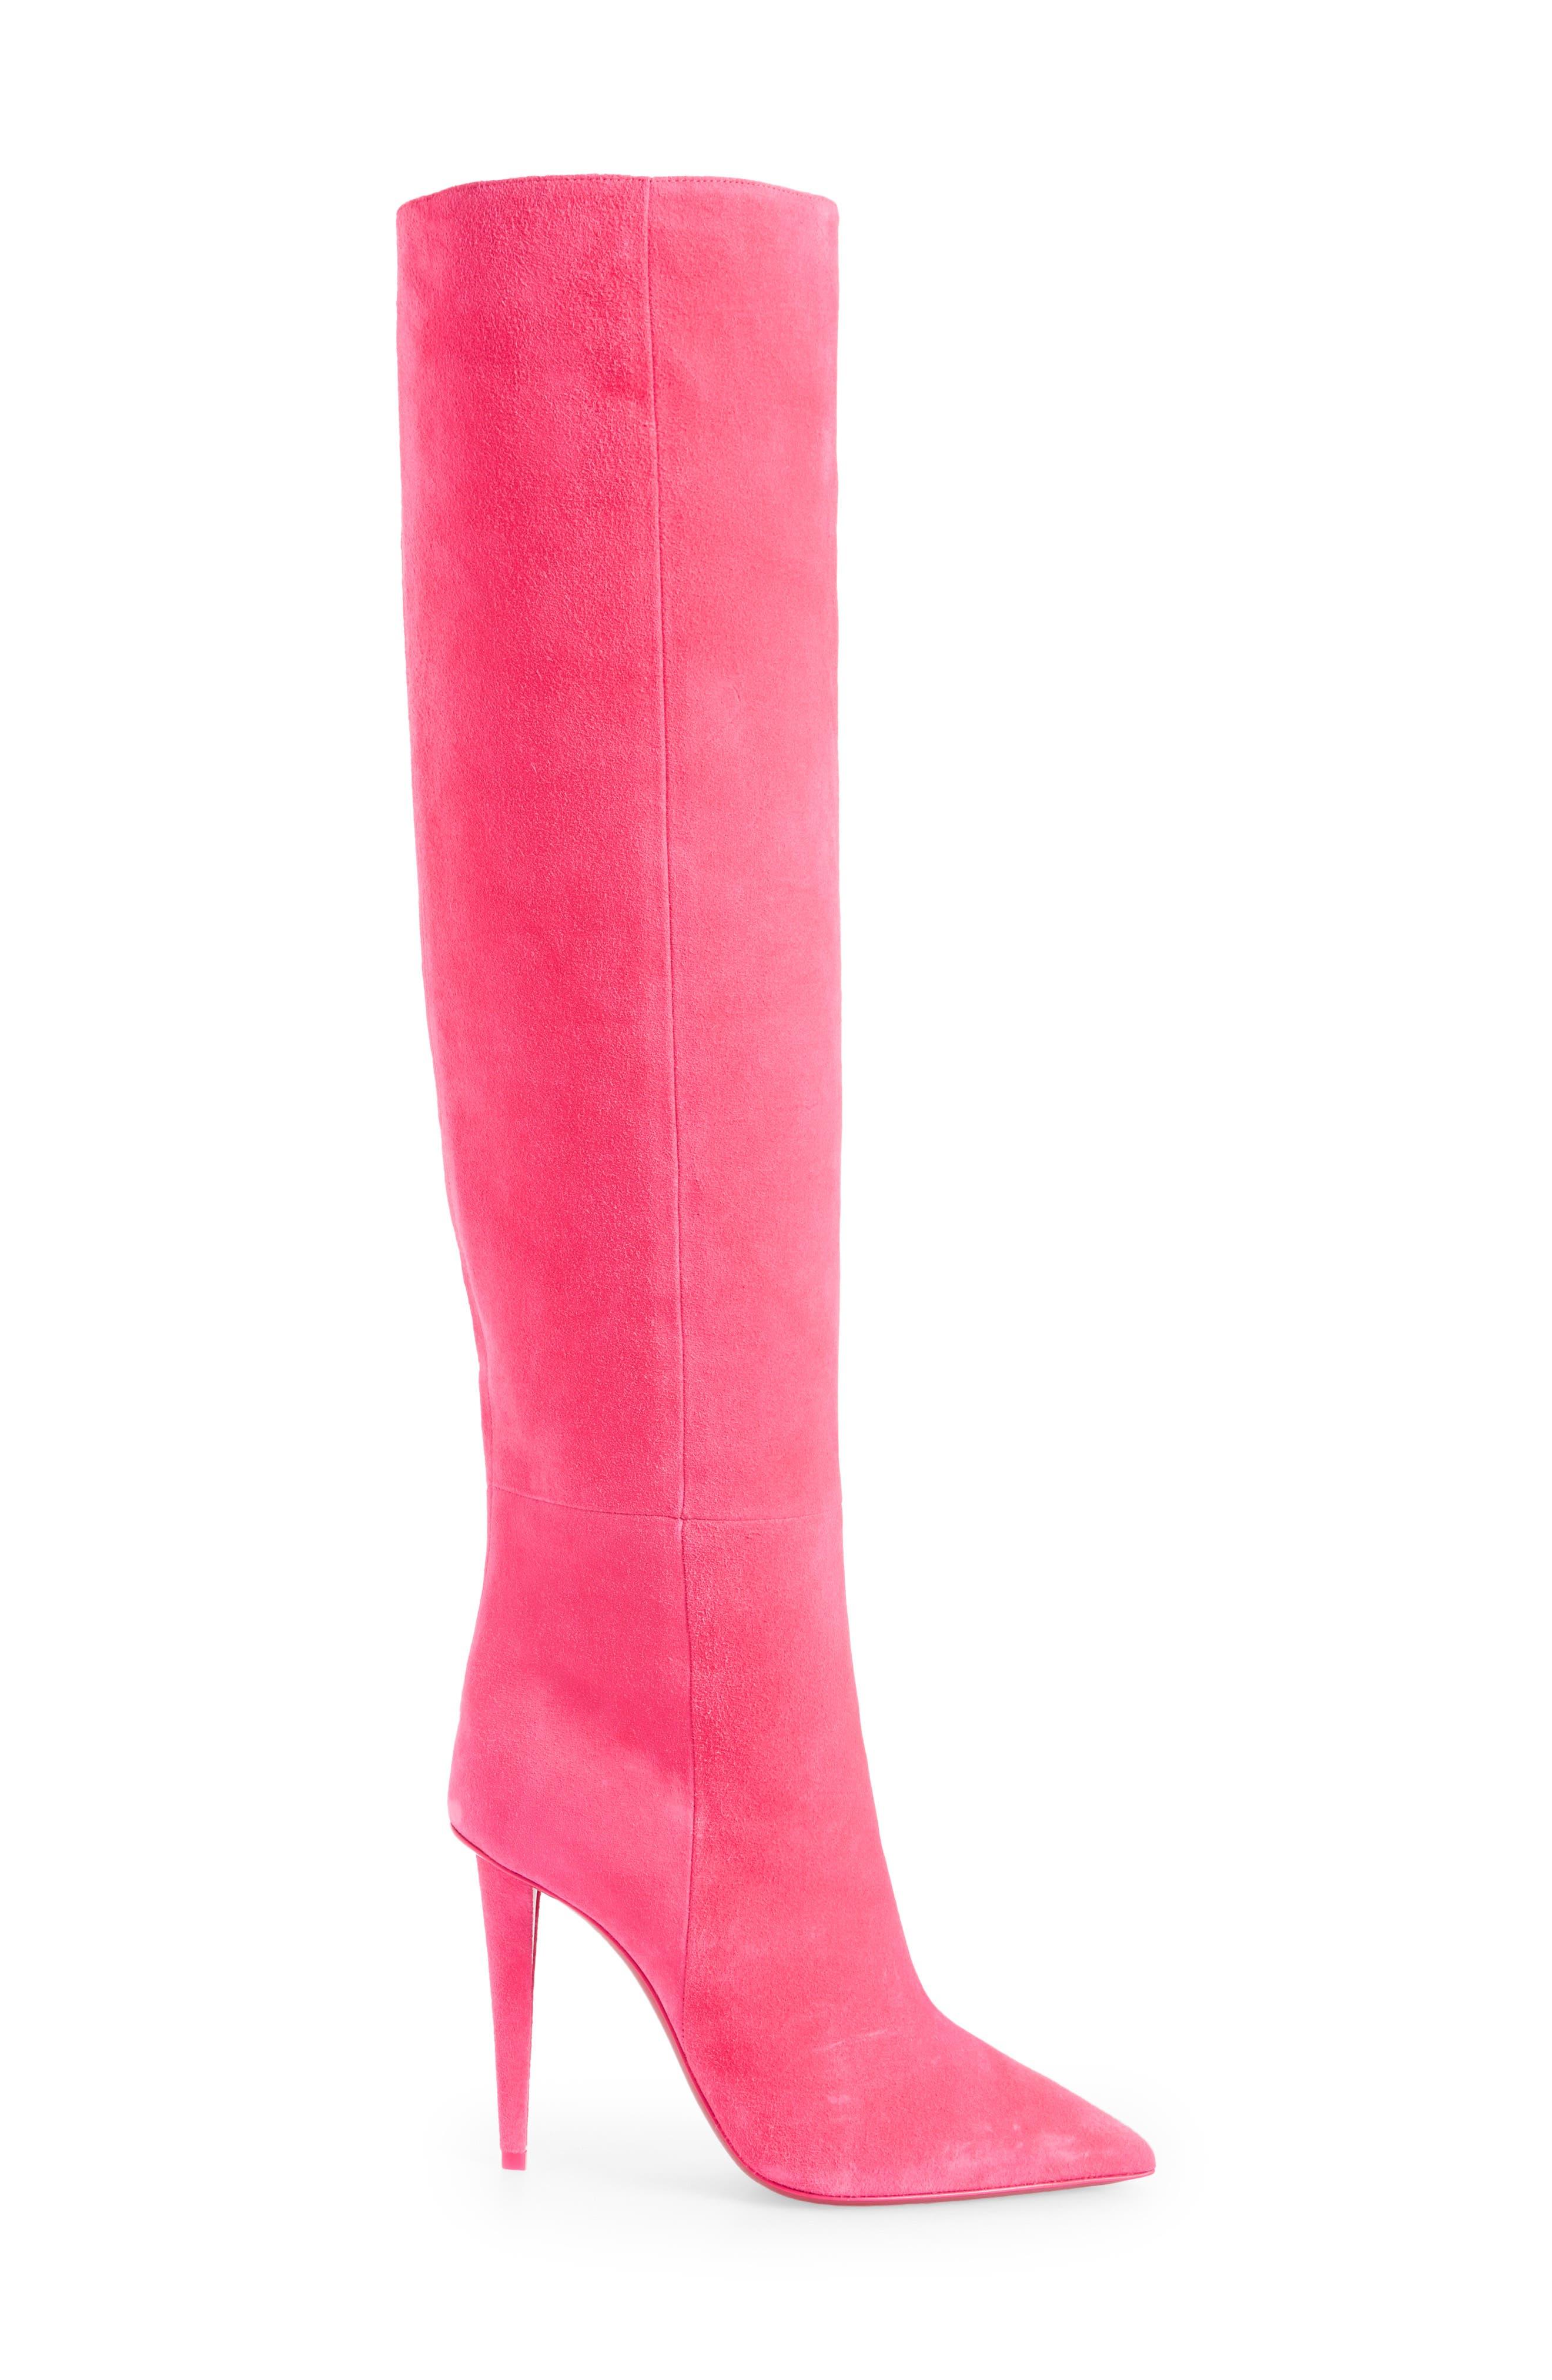 Christian Louboutin Women's Astrilarge Botta Pika Knee-High Boots